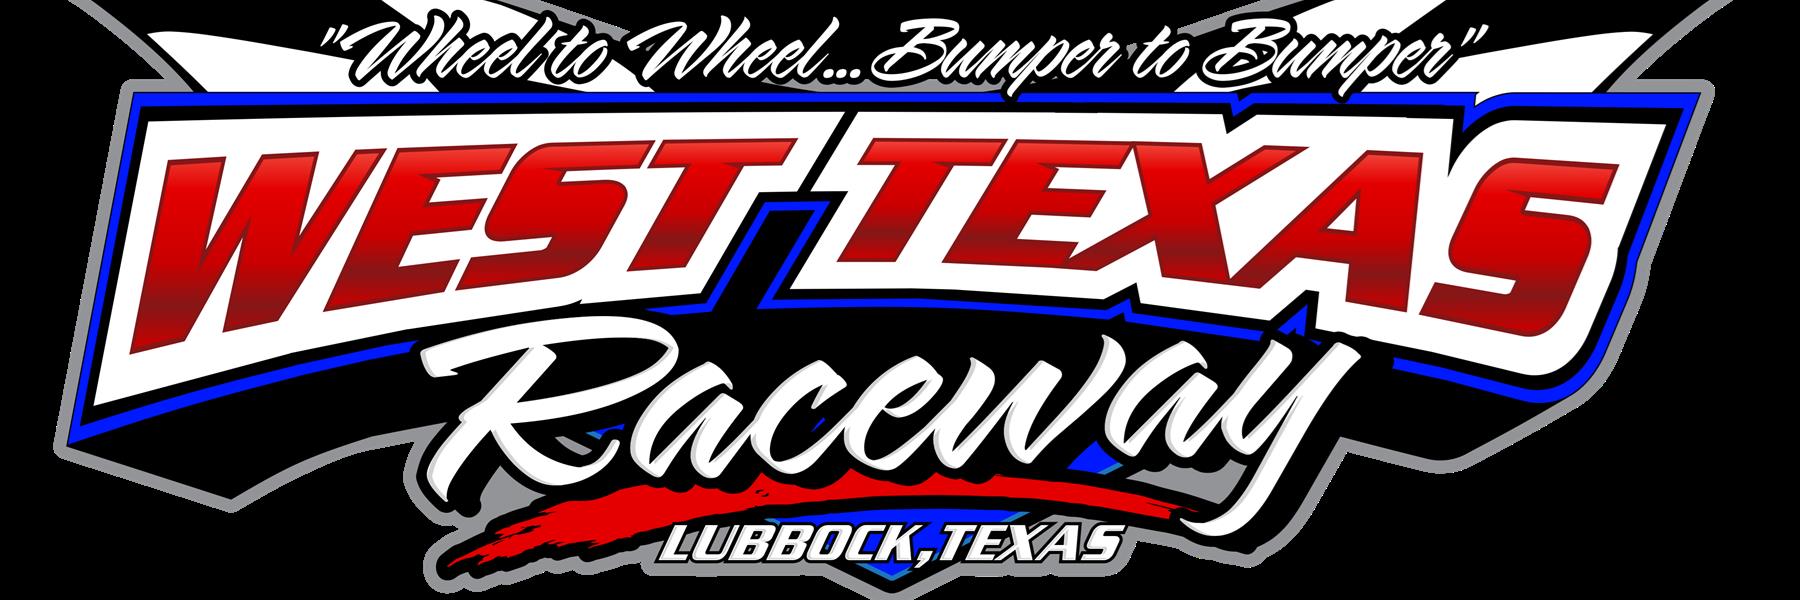 5/21/2021 - West Texas Raceway